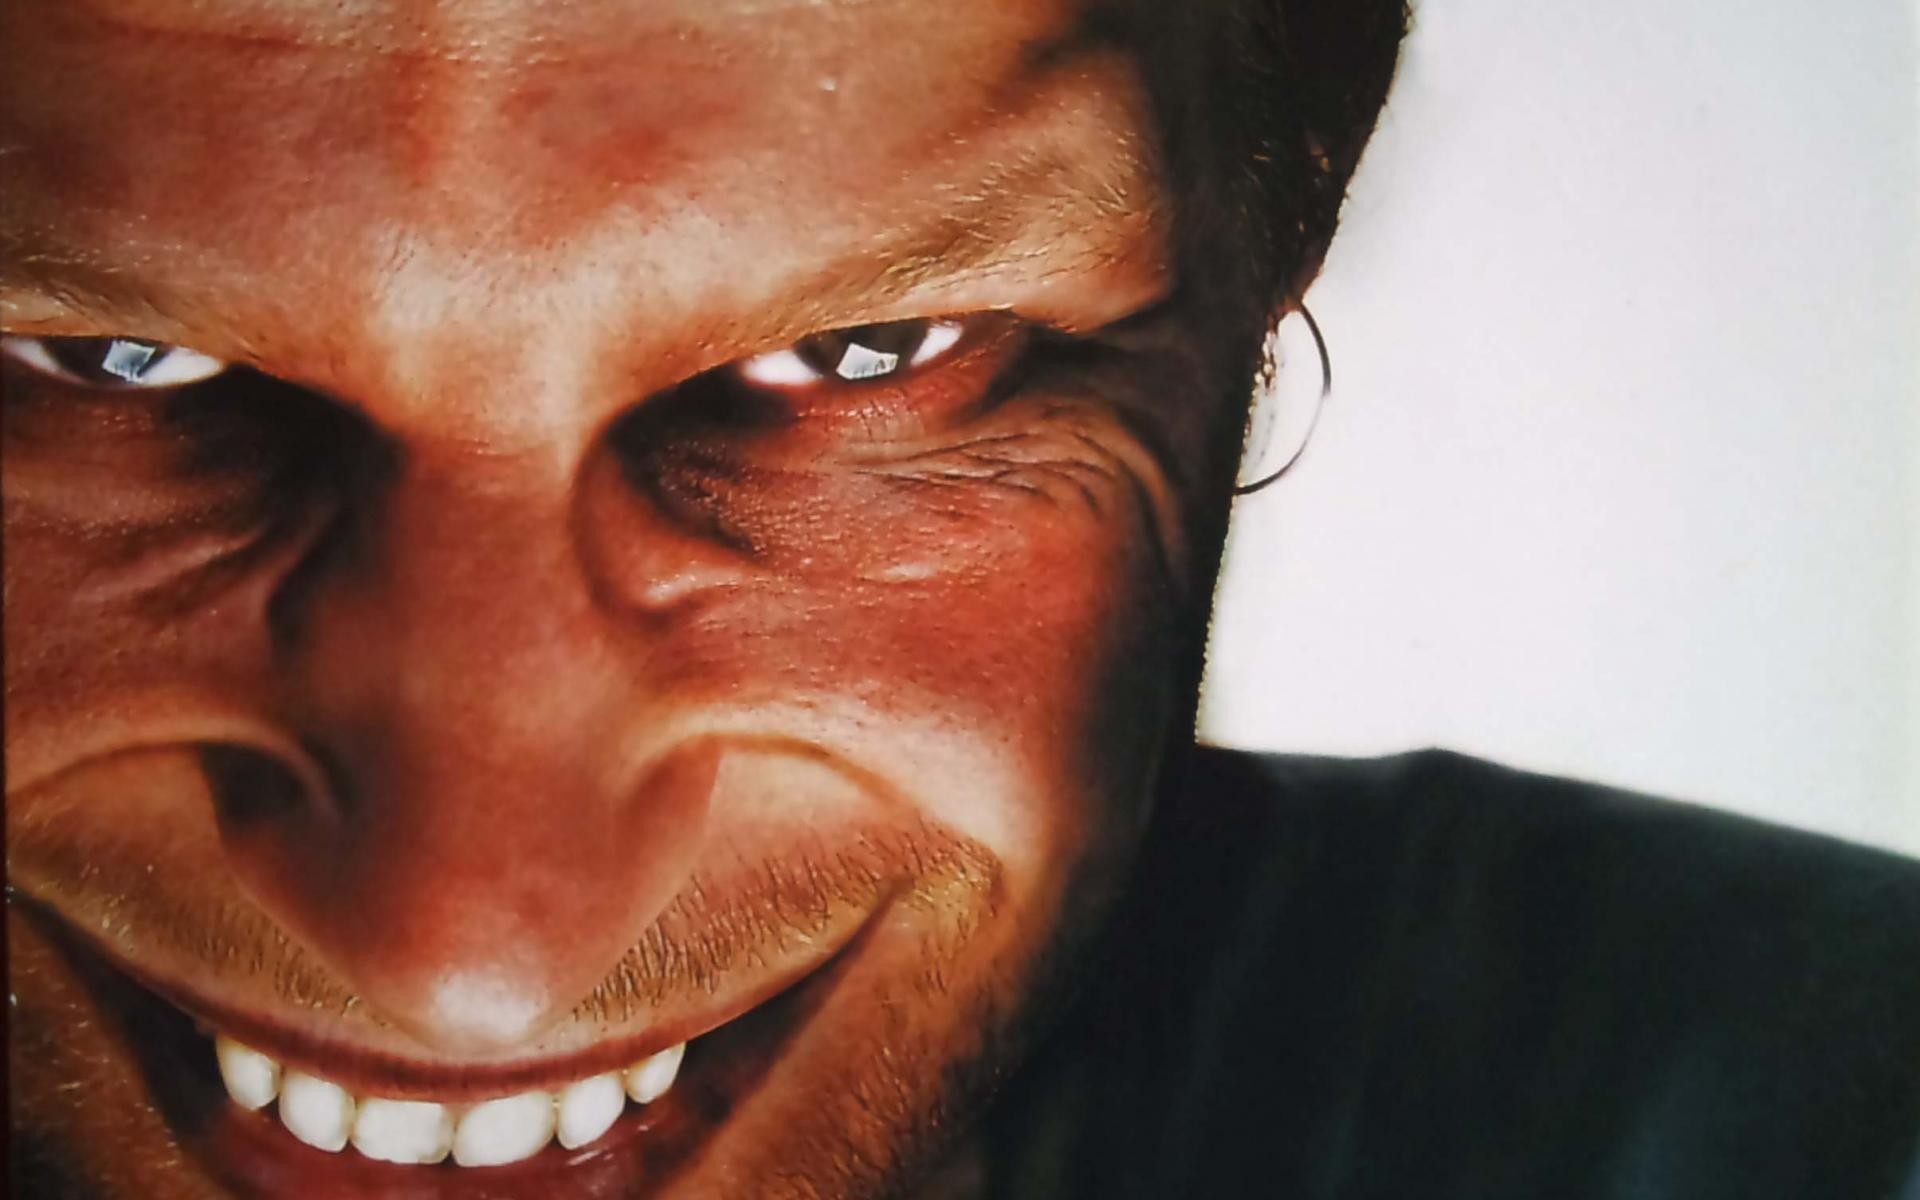 Aphex Twin Smirk Face Music Men Closeup Teeth Brown Eyes 1920x1200